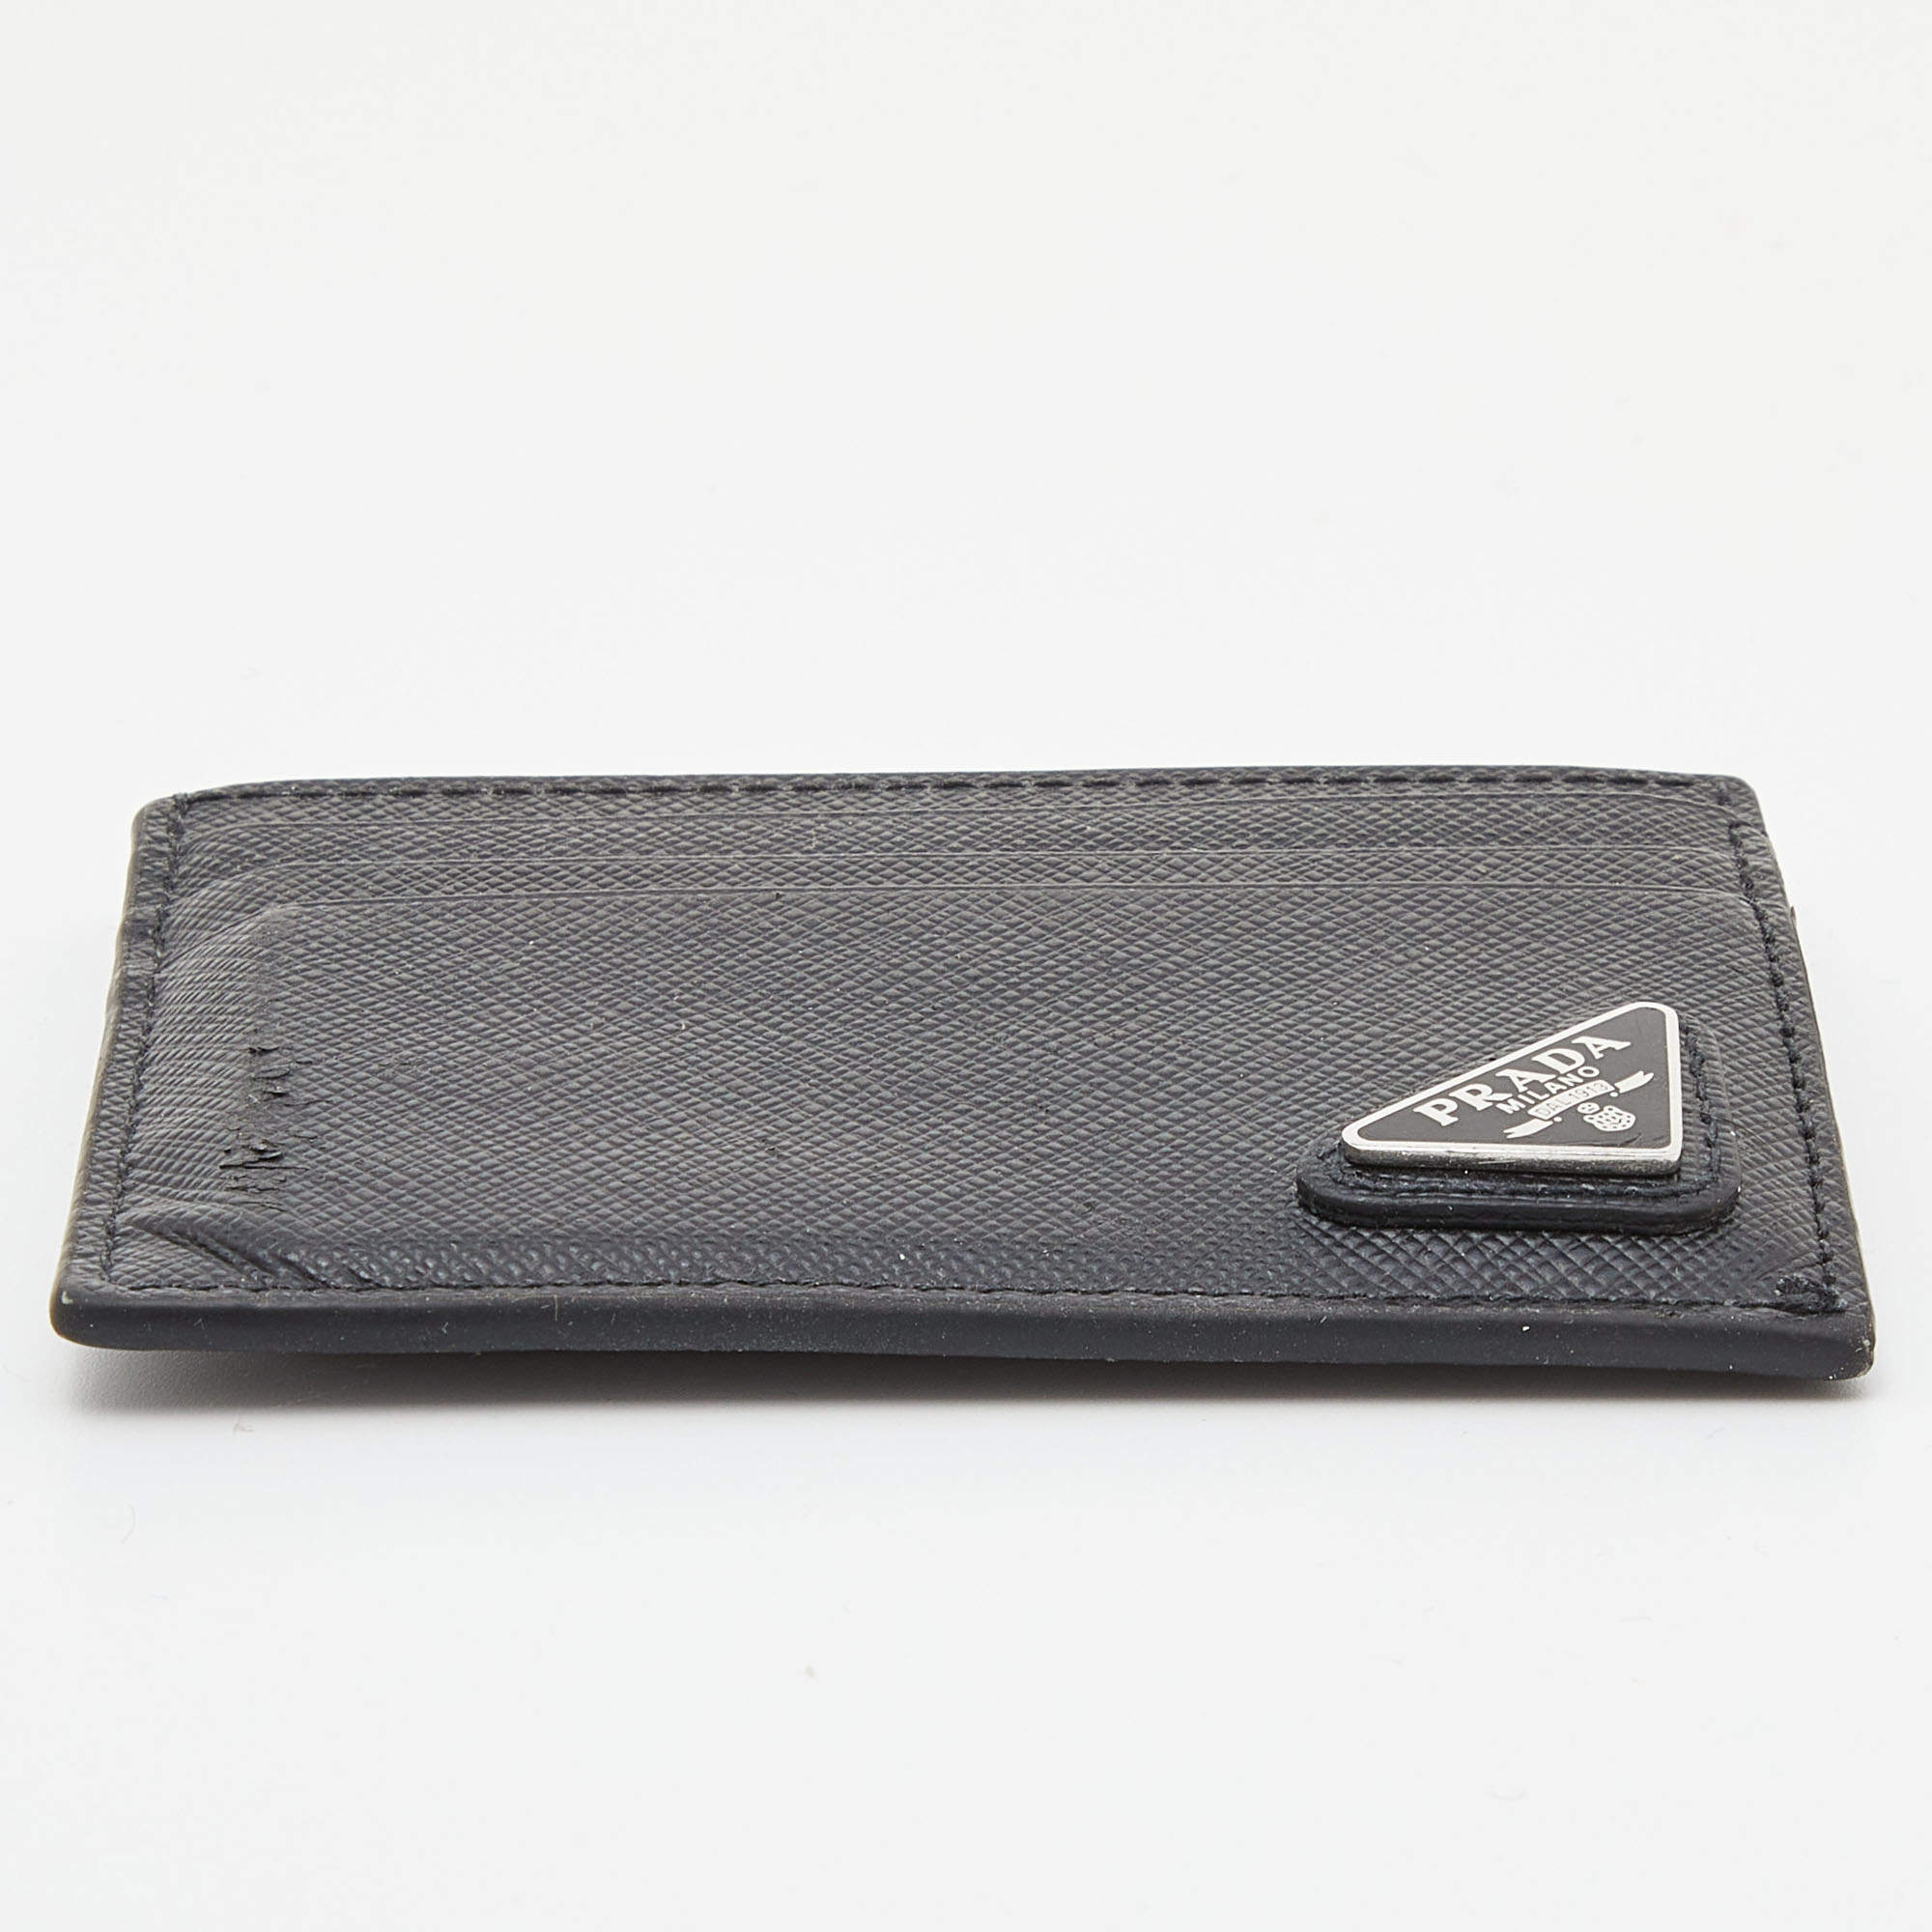 Prada Black Saffiano Metal Leather Card Holder Prada